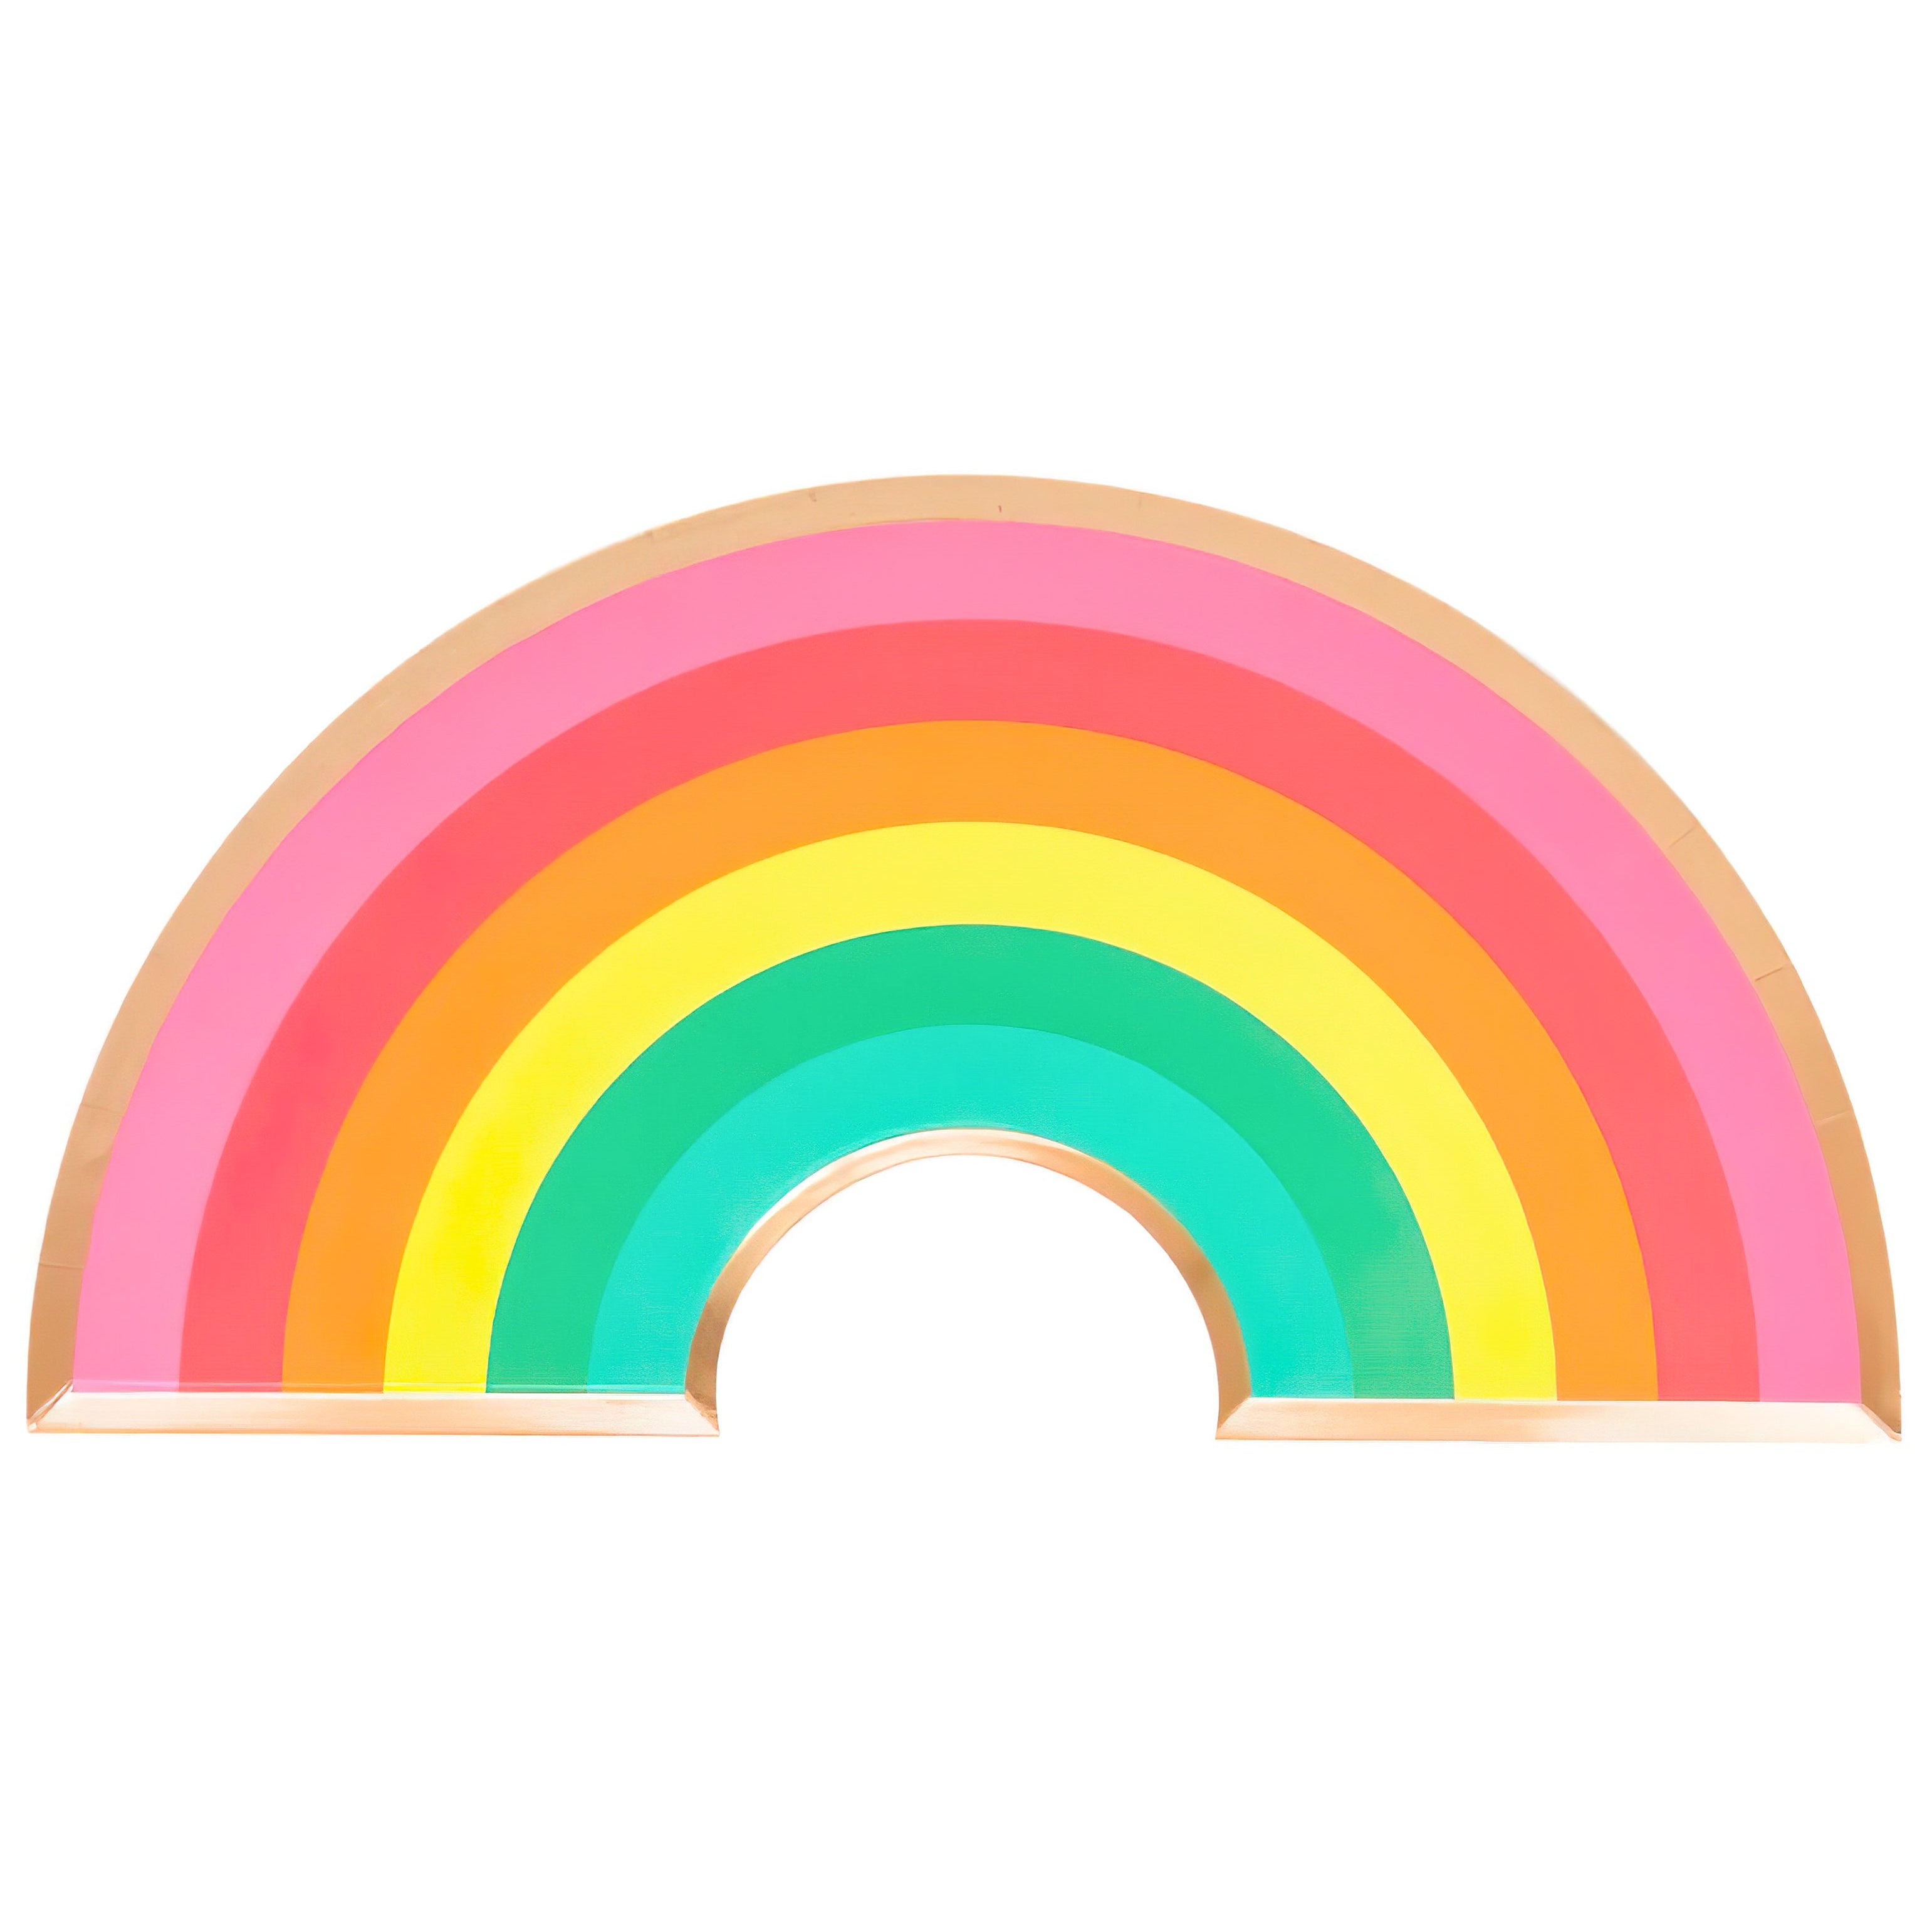 Rainbow Paper Plates